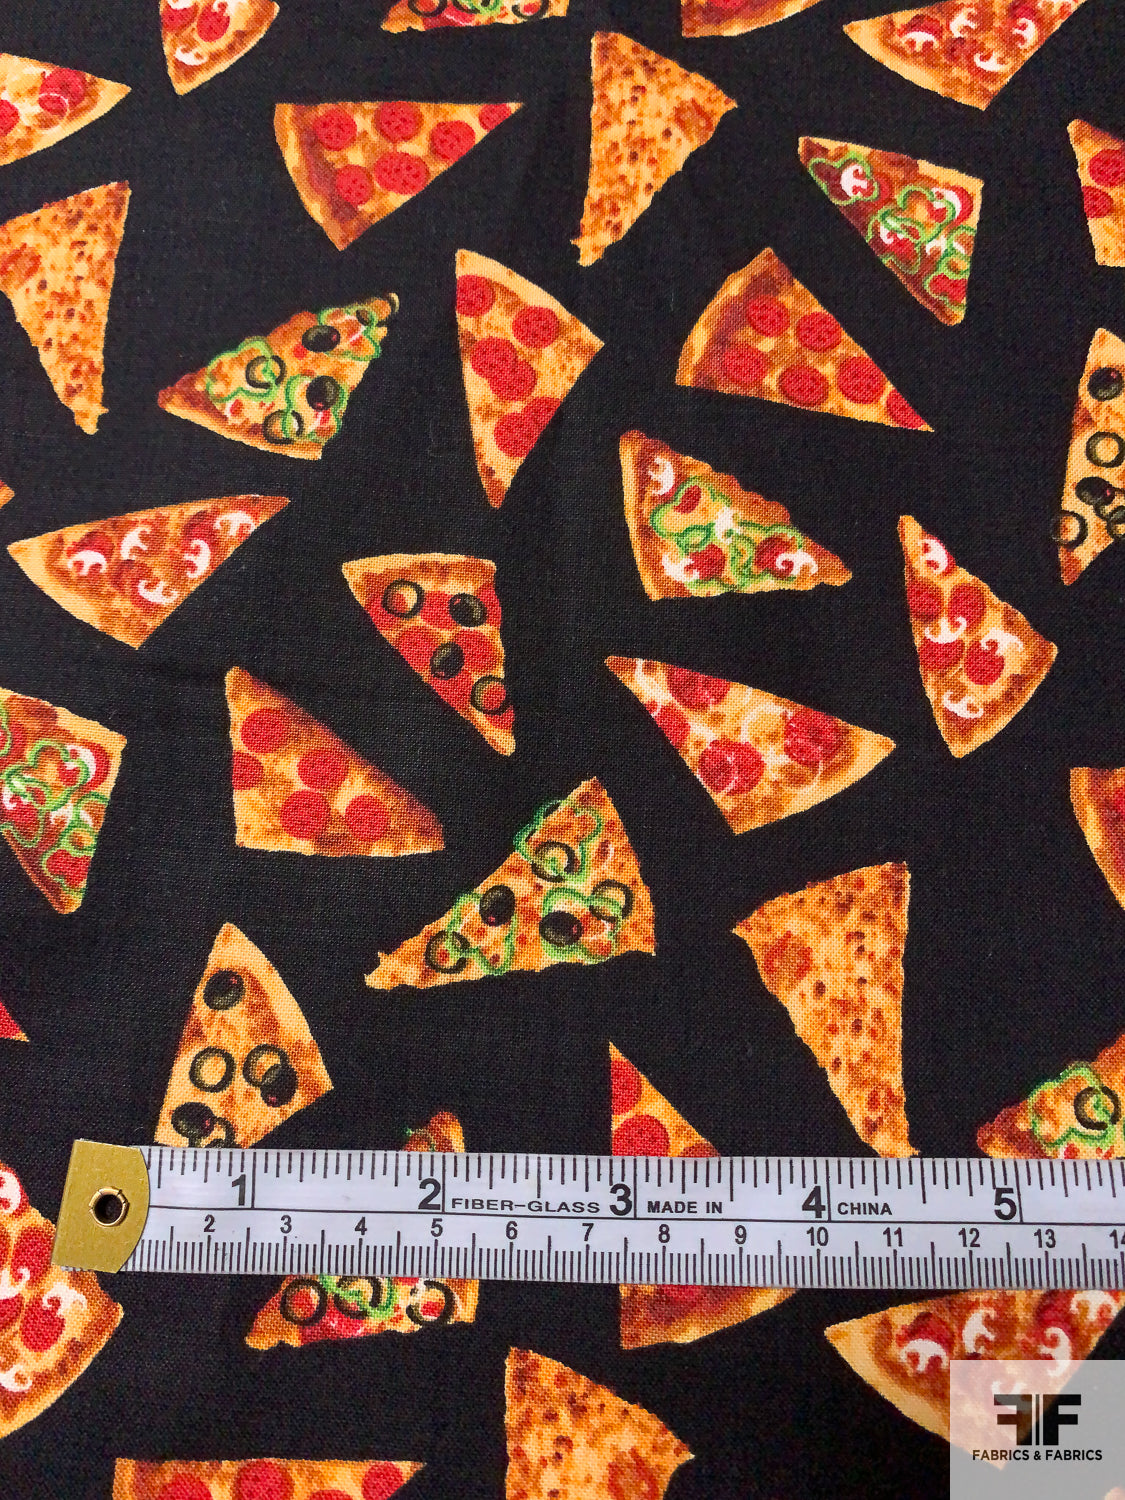 Pizza Slices Printed Cotton Lawn - Black / Orange / Red